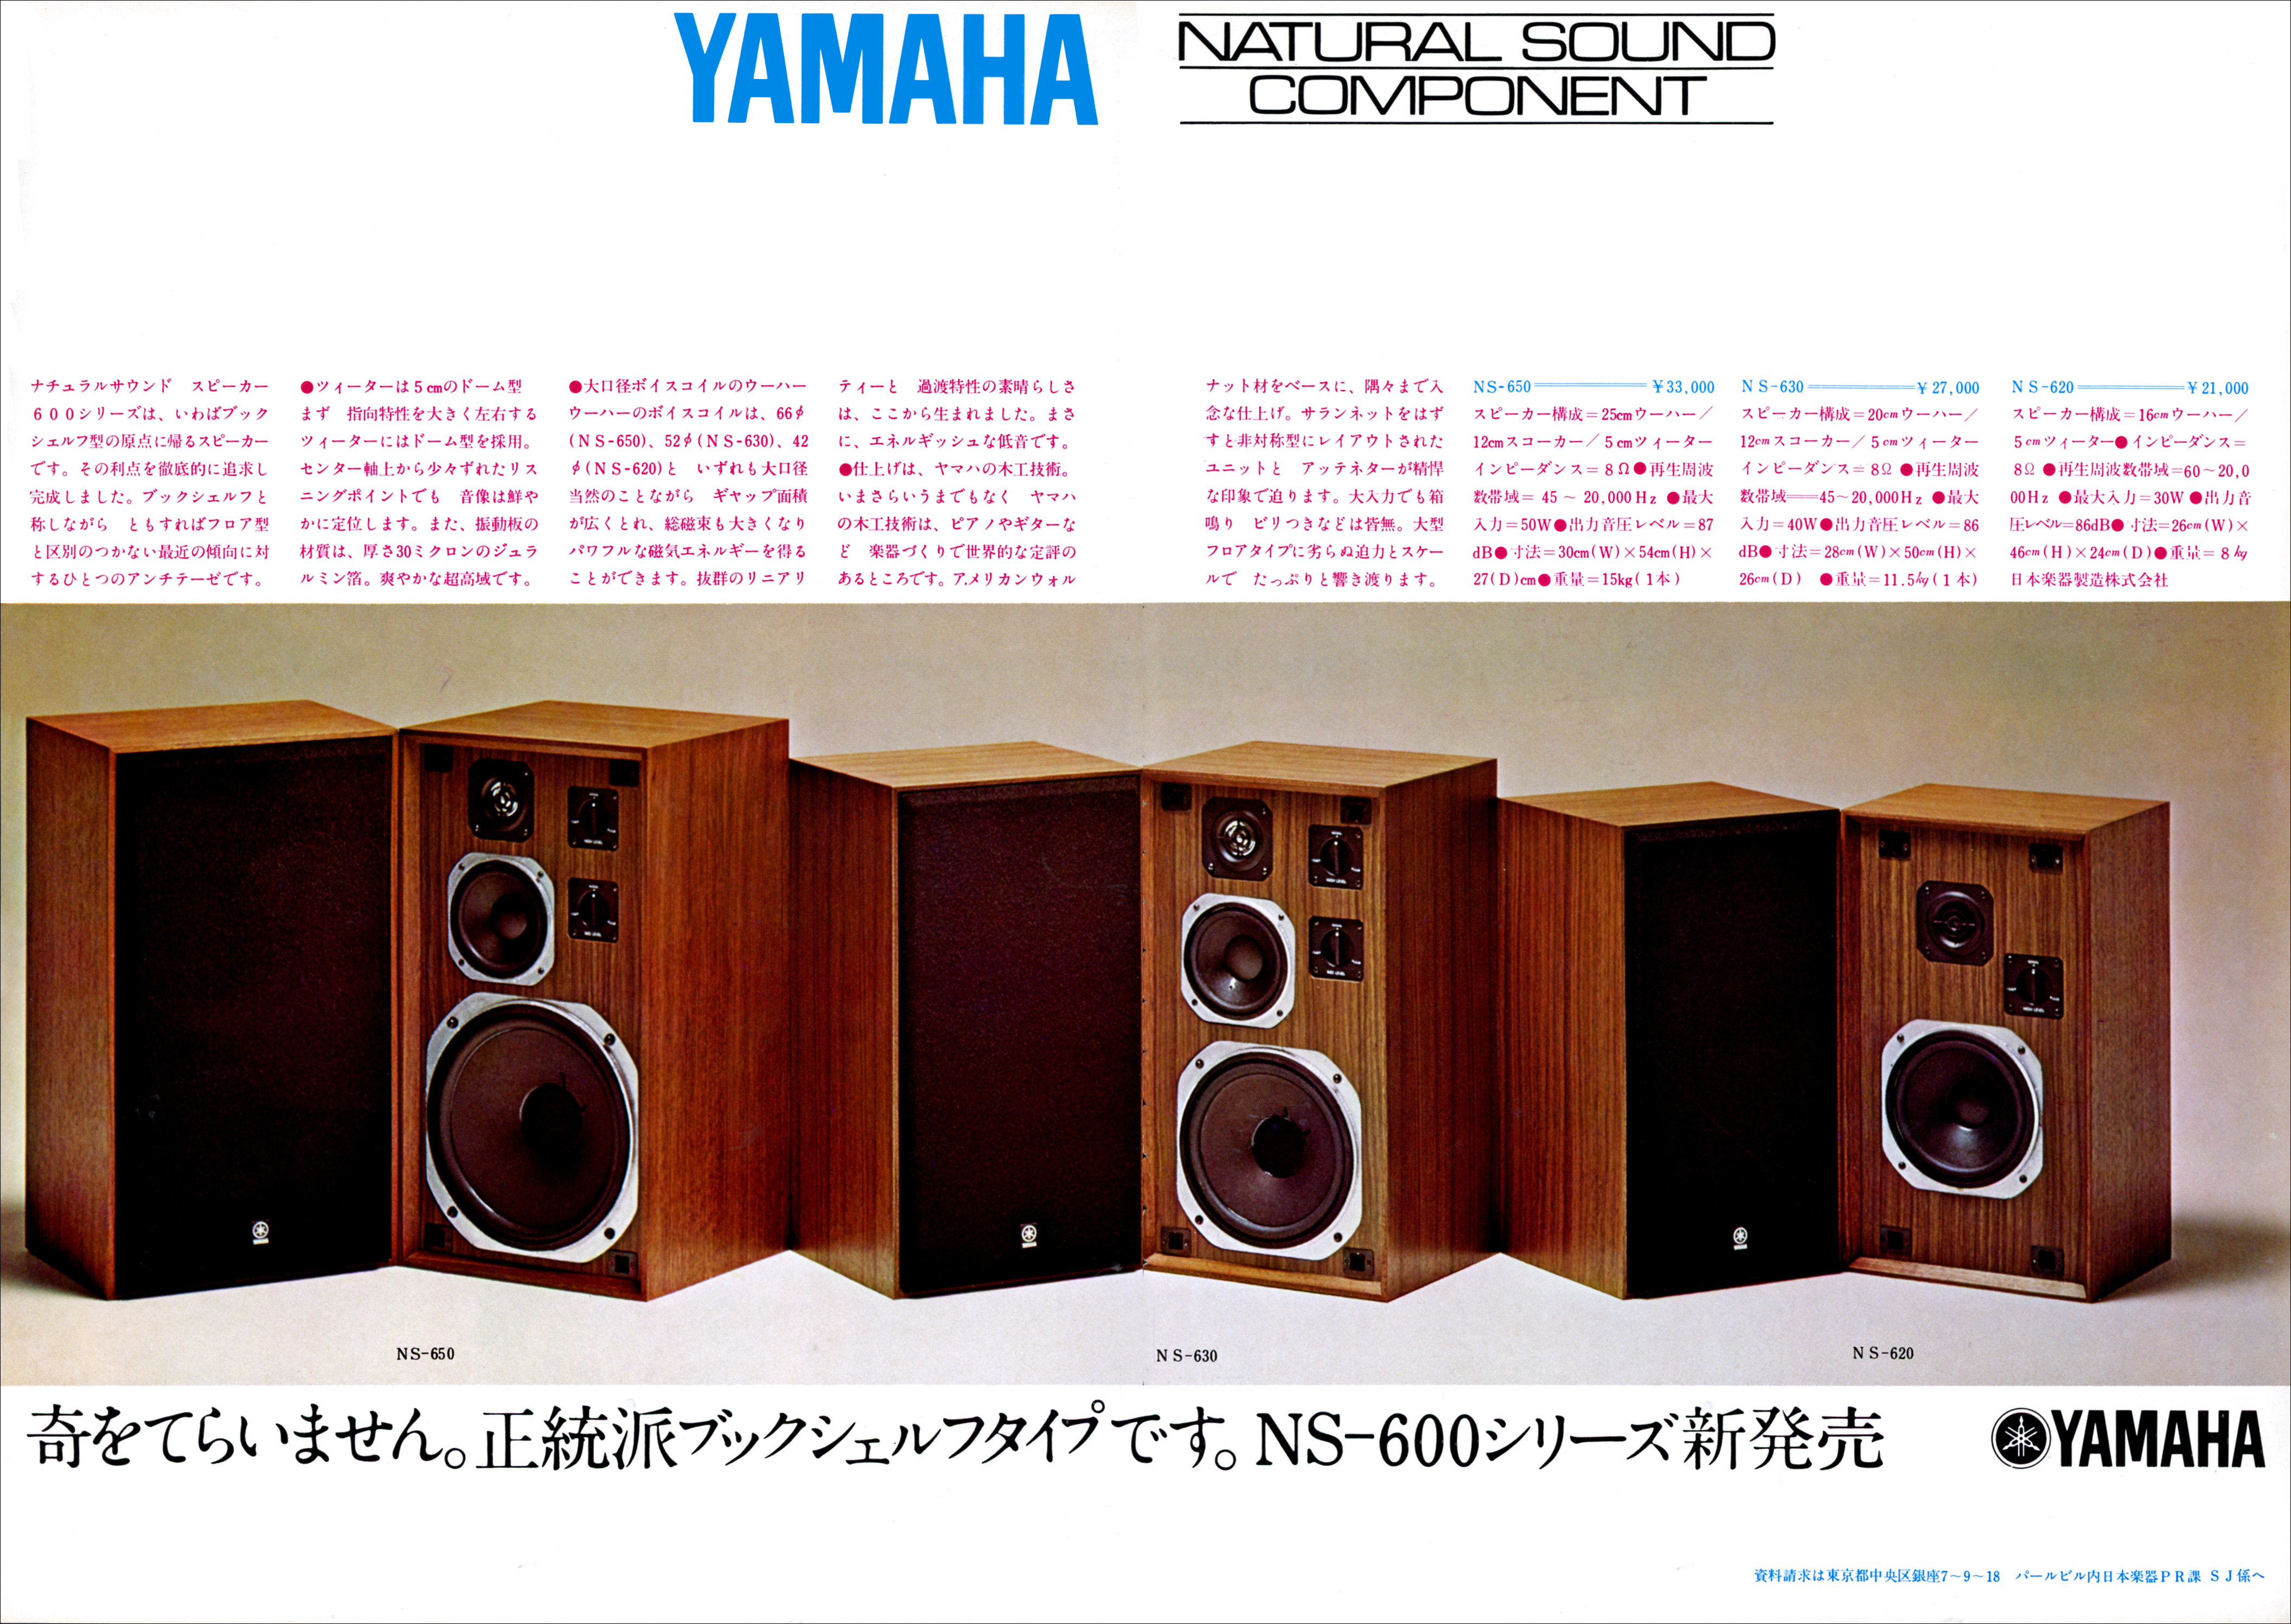 Pin by Akhilesh on Audio | Yamaha, Japan, Audio